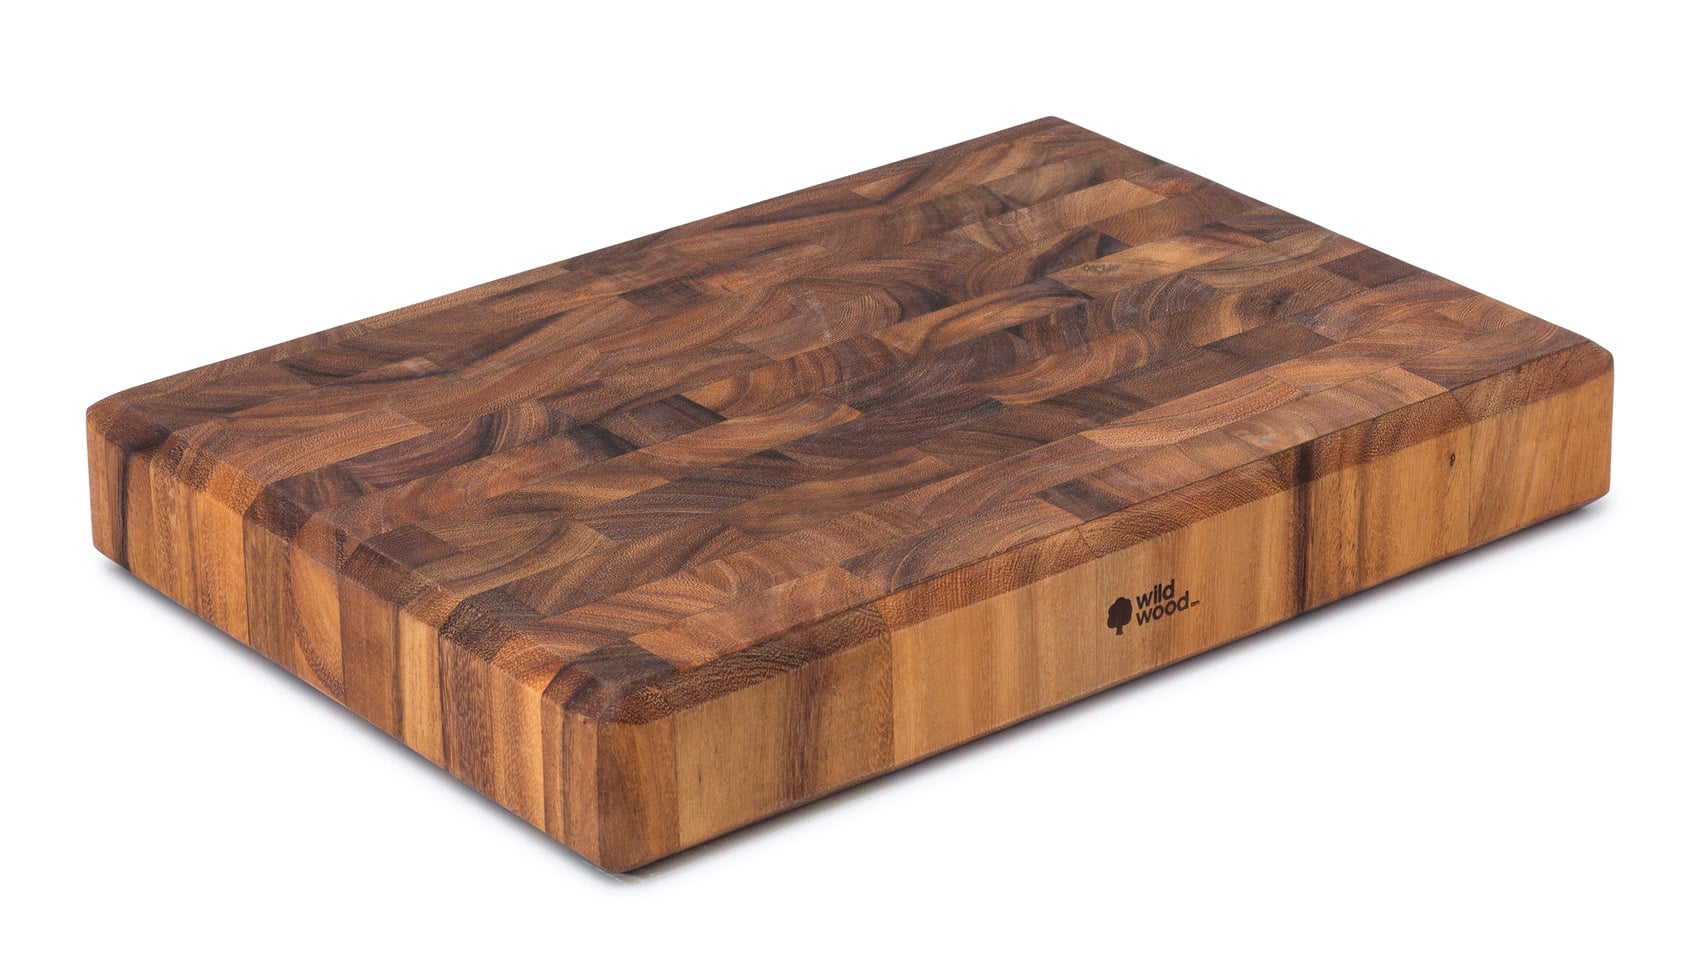 Dark wooden chopping board